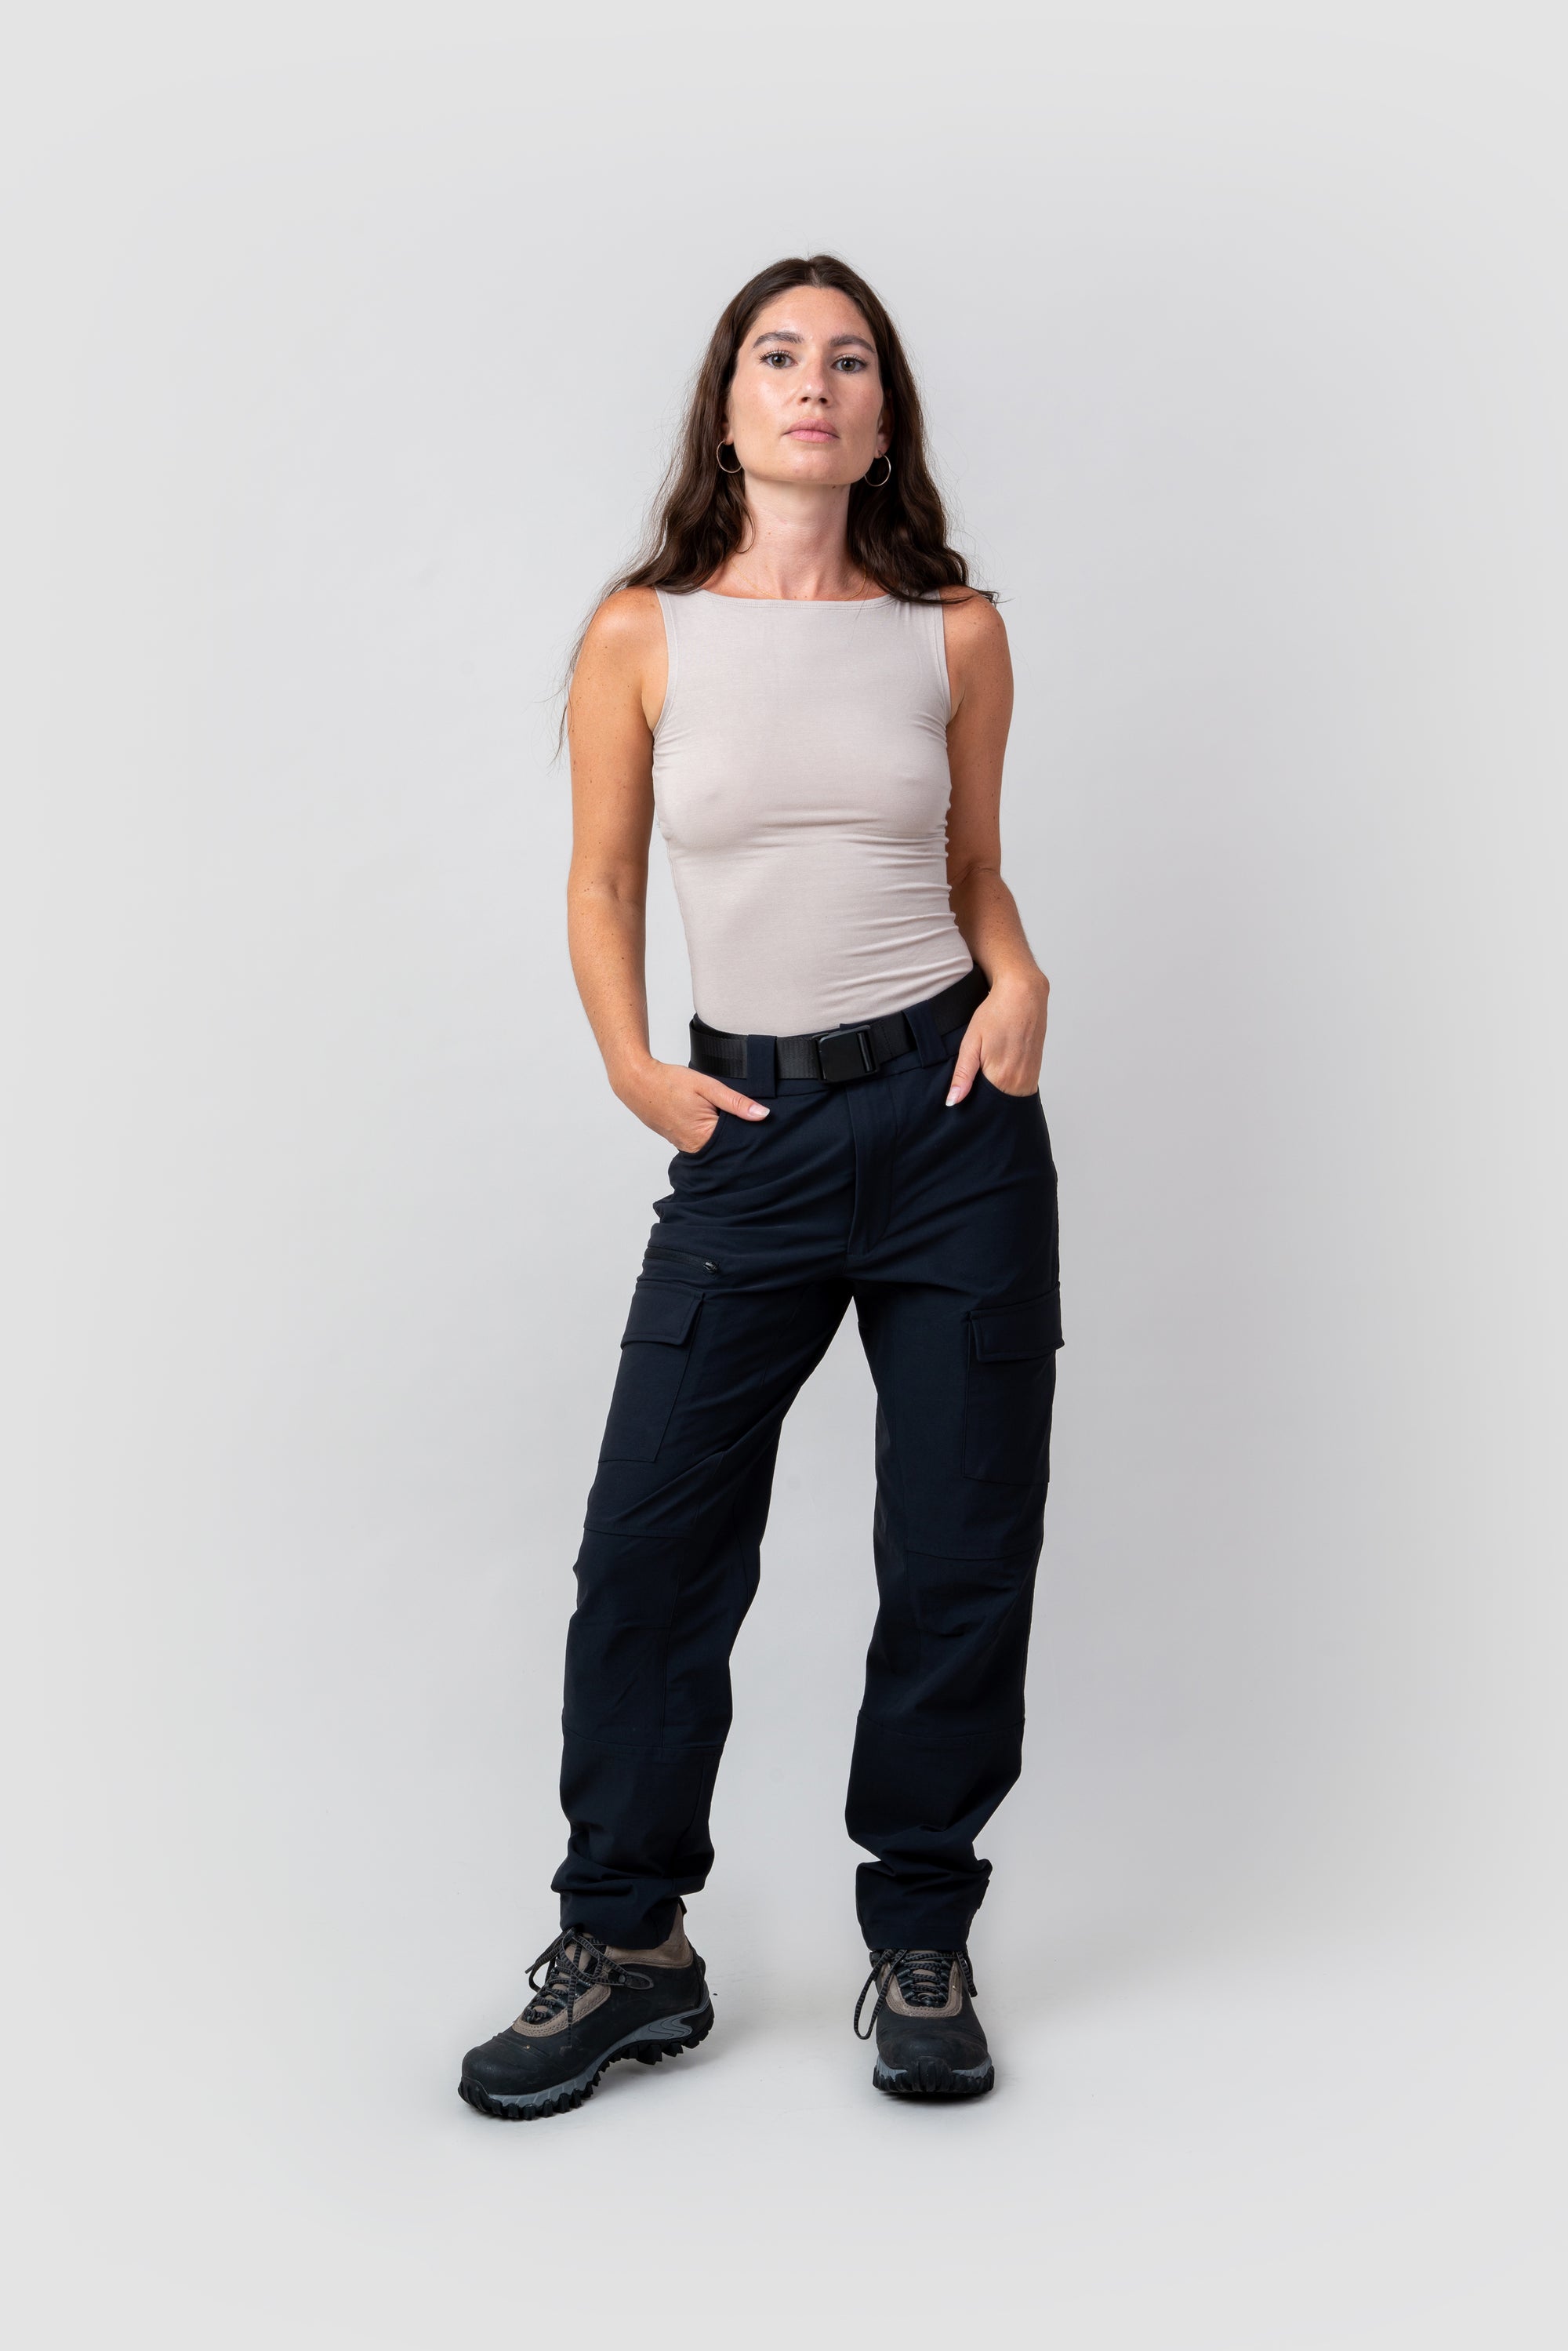 Women's Cargo Mid-Rise Slim Regular Fit Full Pants - A New Day Black 8